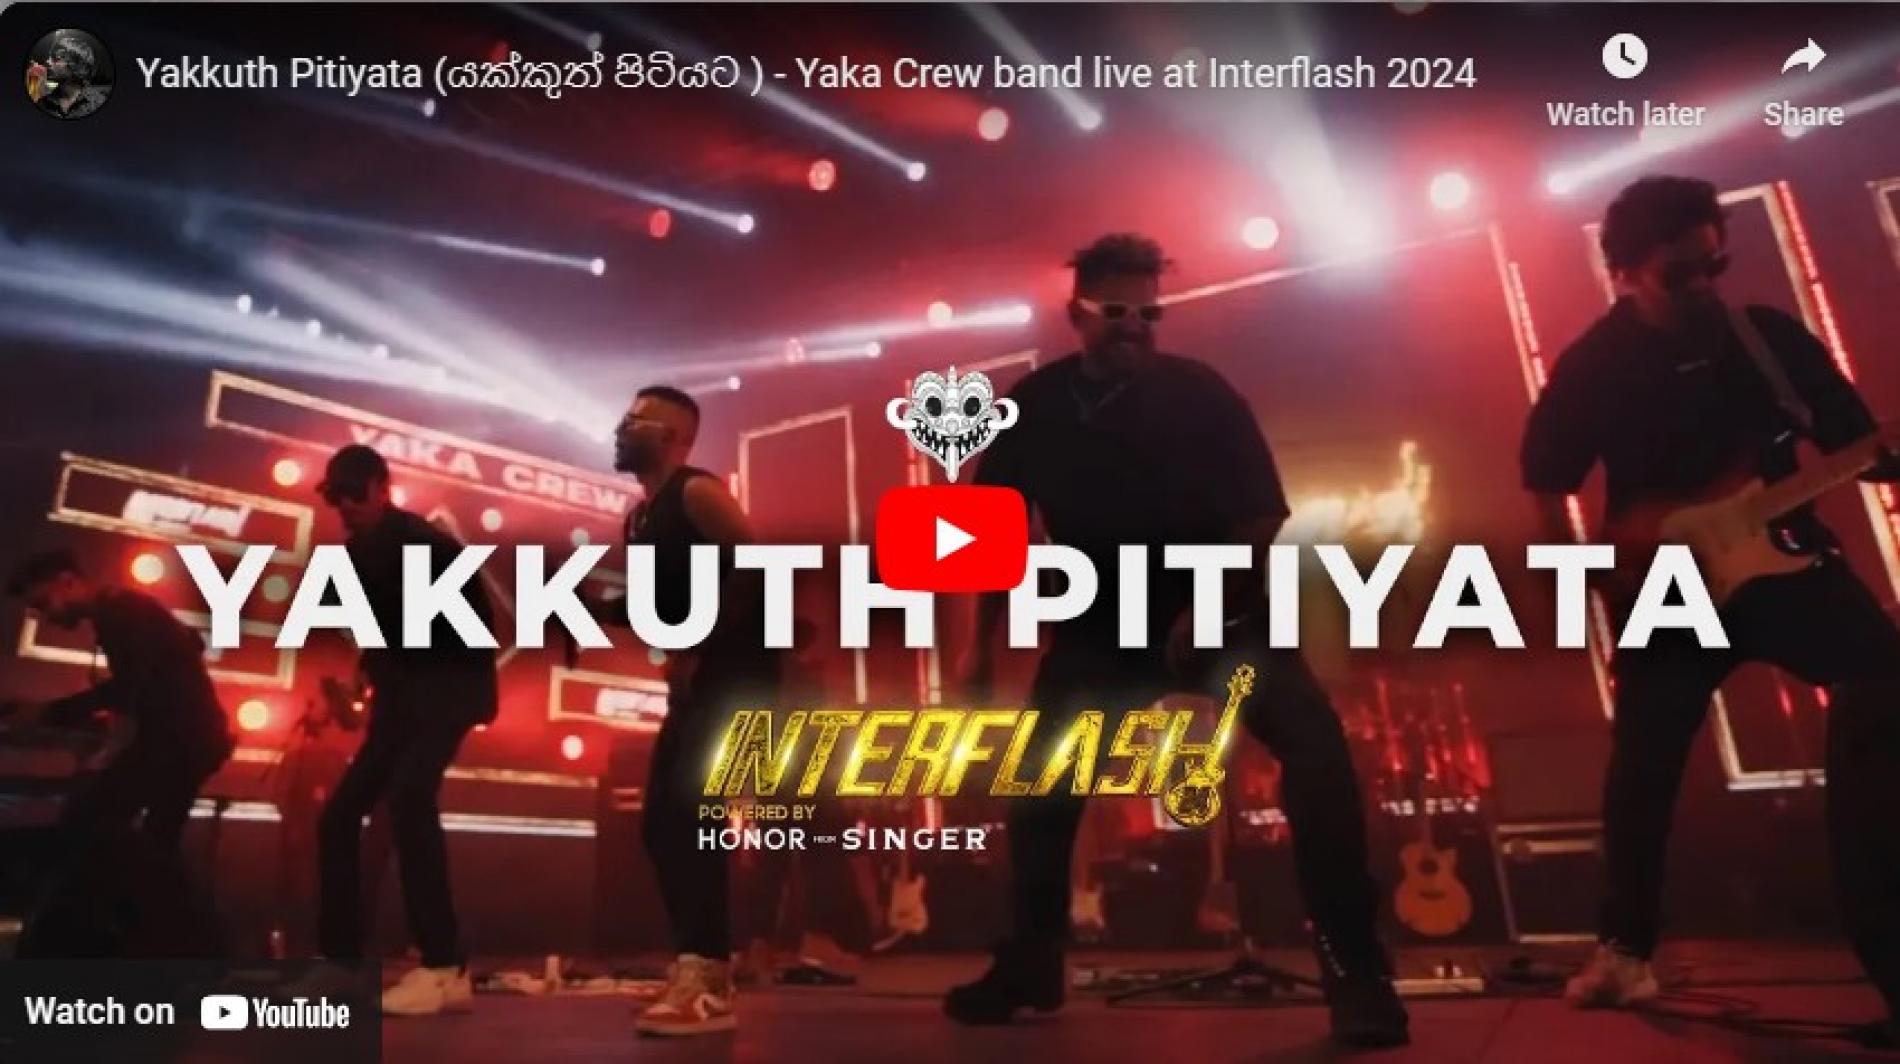 New Music : Yakkuth Pitiyata (යක්කුත් පිටියට ) – Yaka Crew band live at Interflash 2024